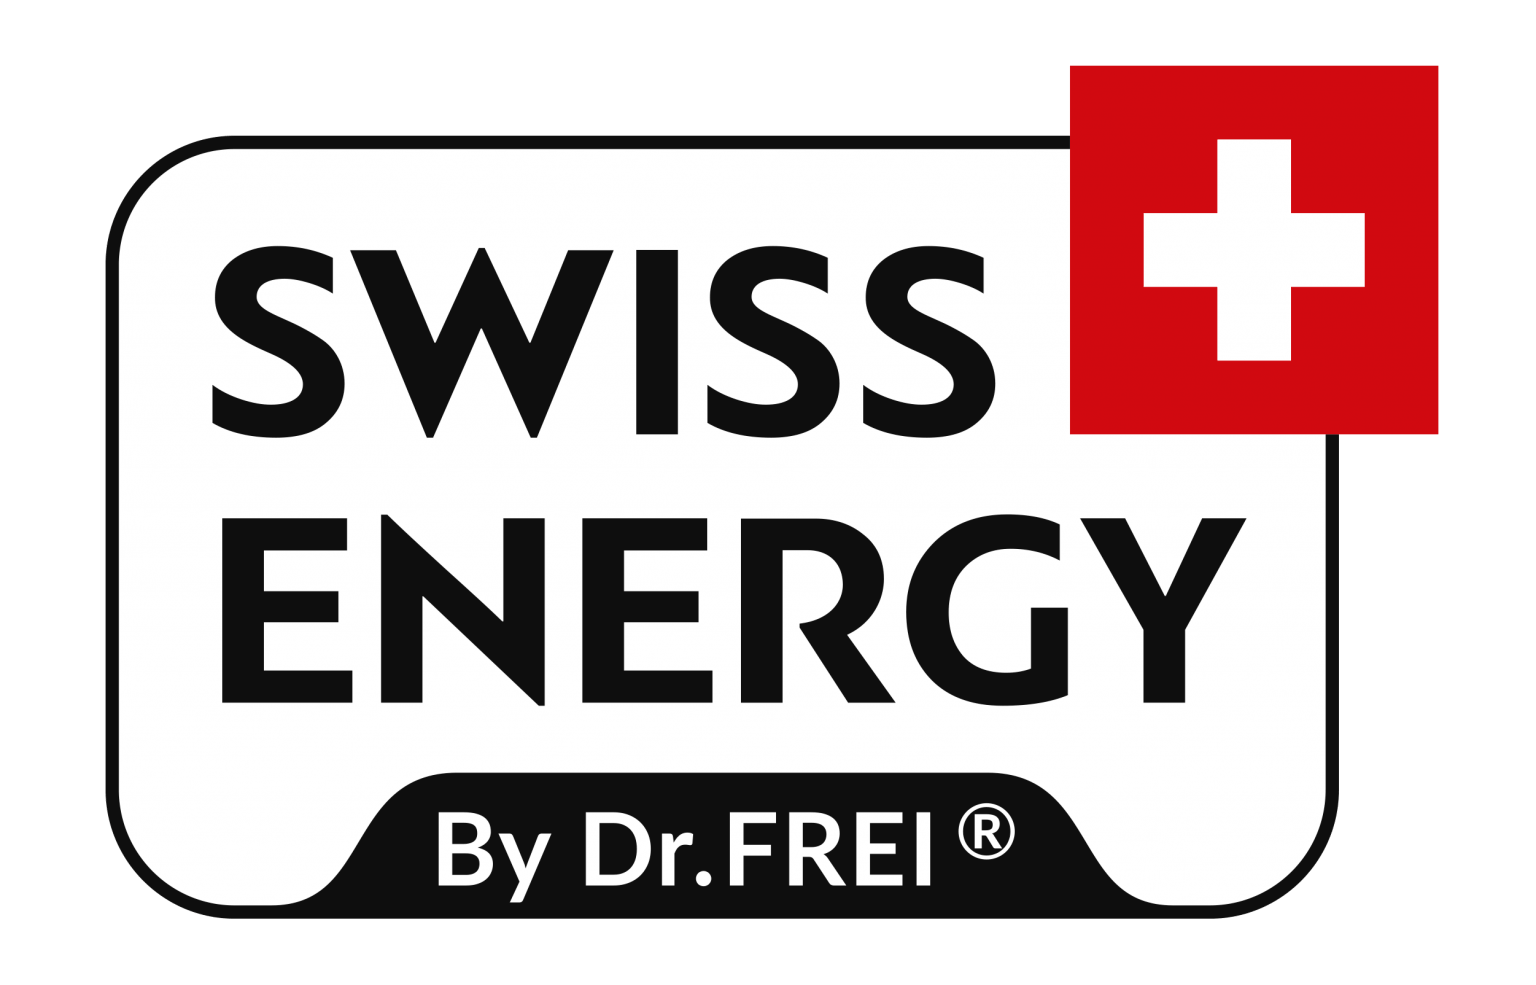 SWISS ENERGY